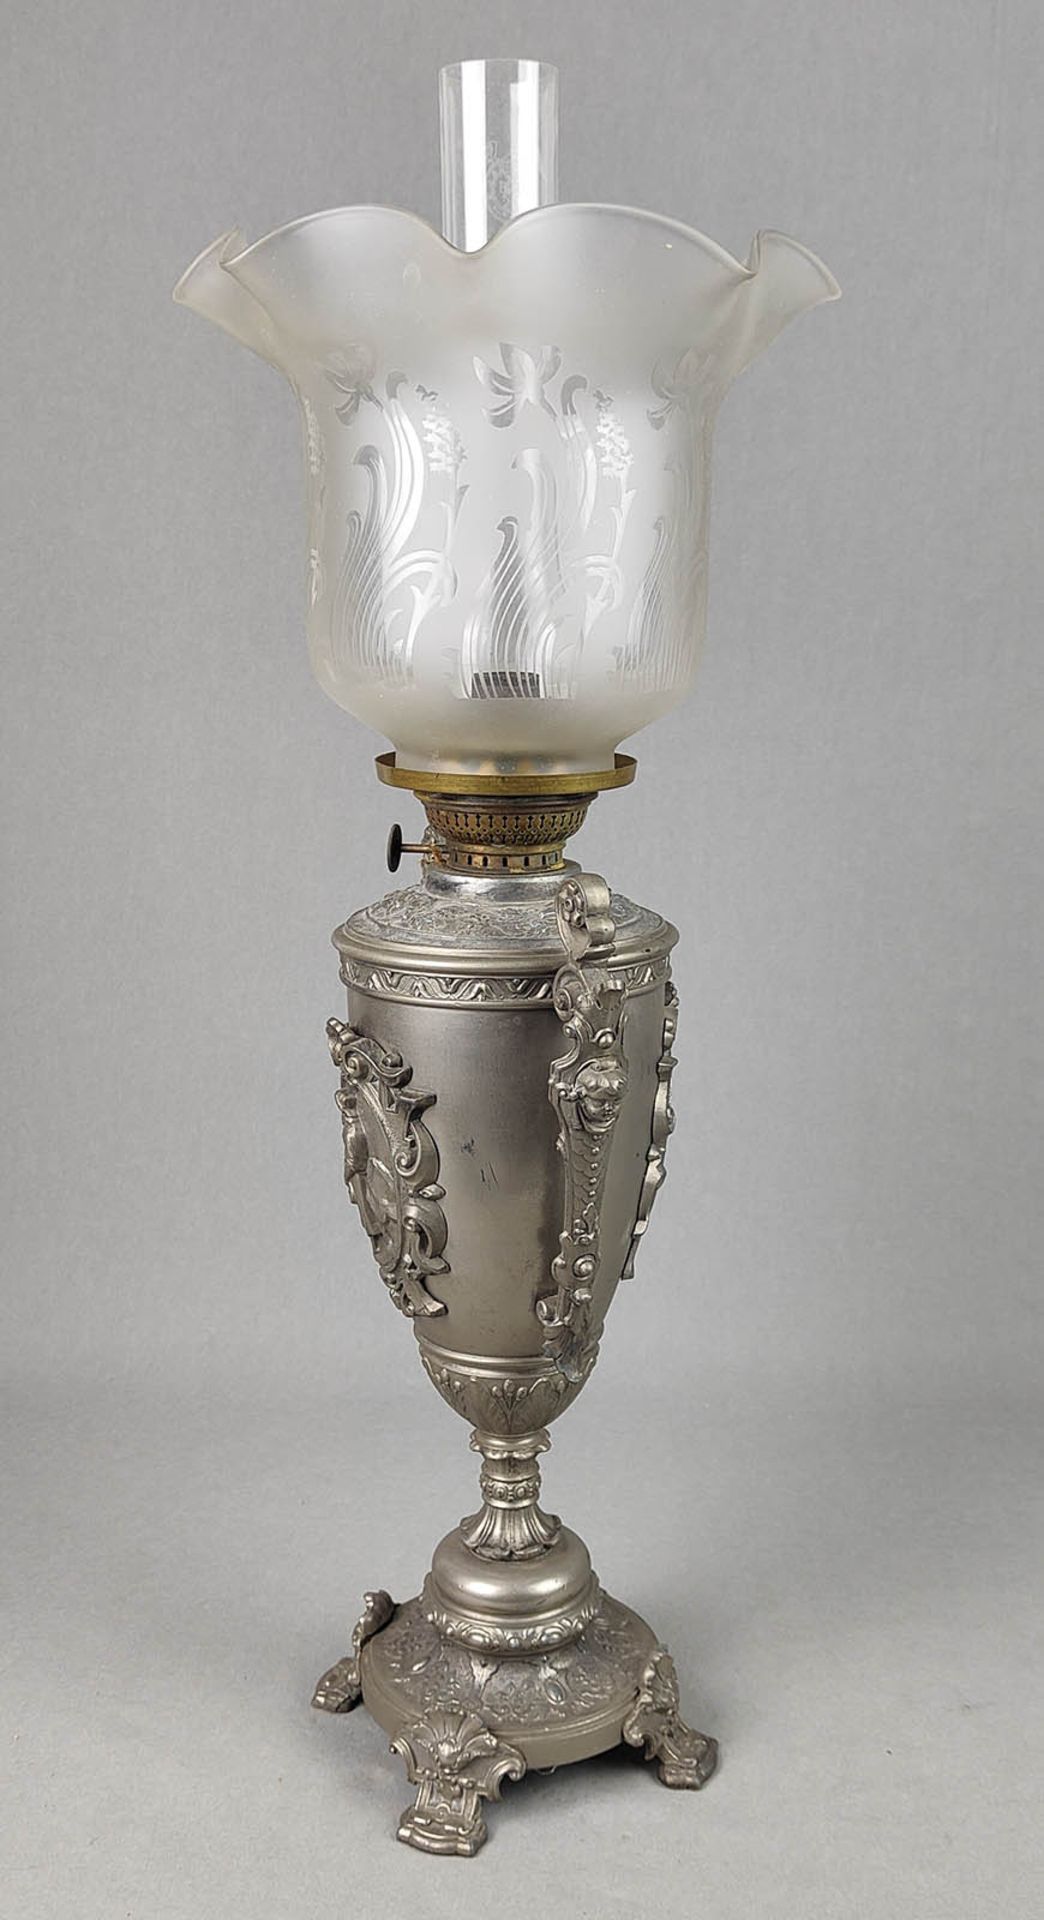 Zinn Petroleumlampe um 1890 - Bild 3 aus 5